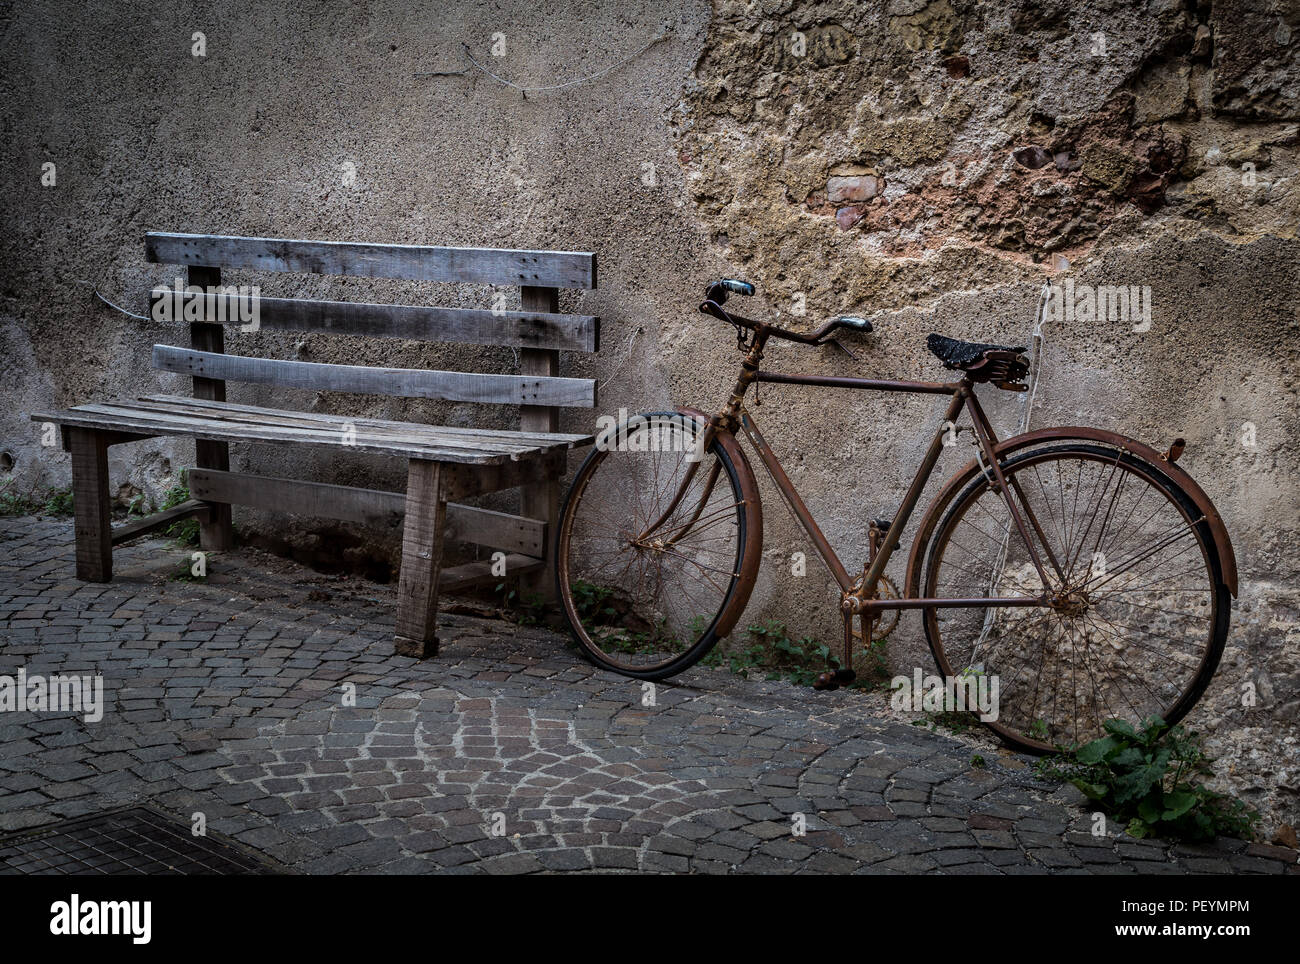 Rusty bike on street, Asolo, Italy Stock Photo